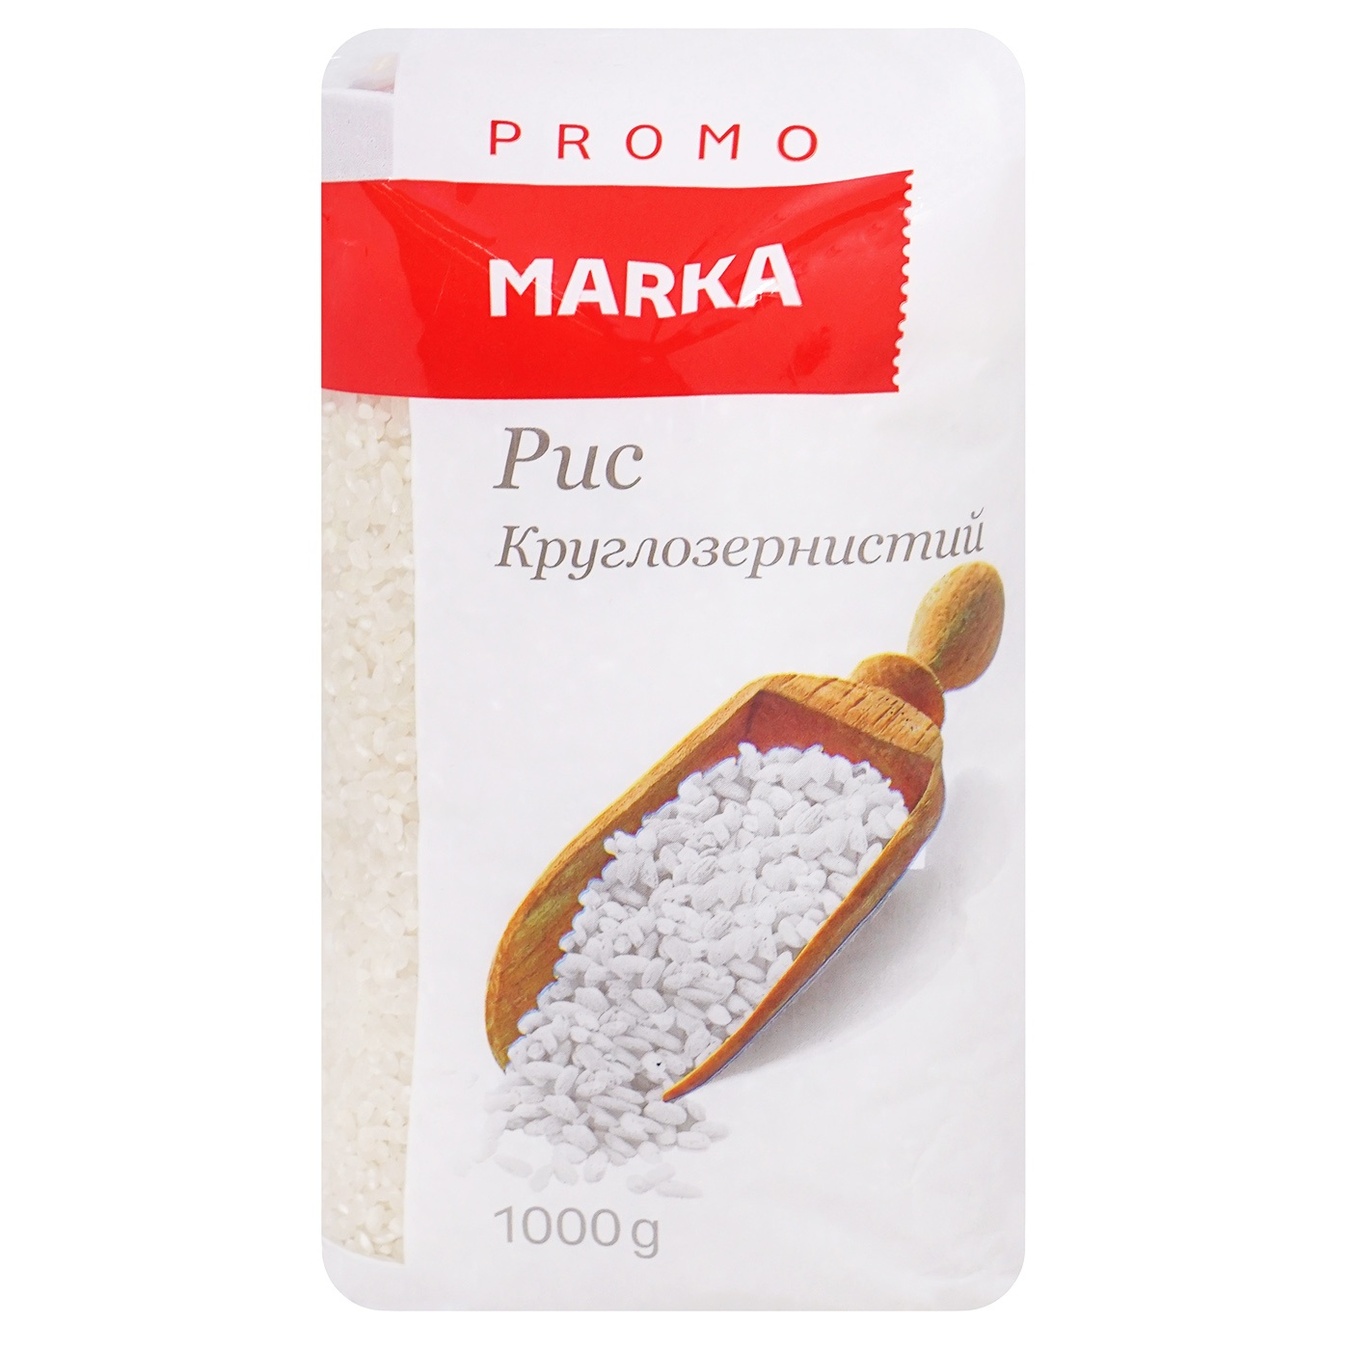 Marka Promo round grain rice 1kg